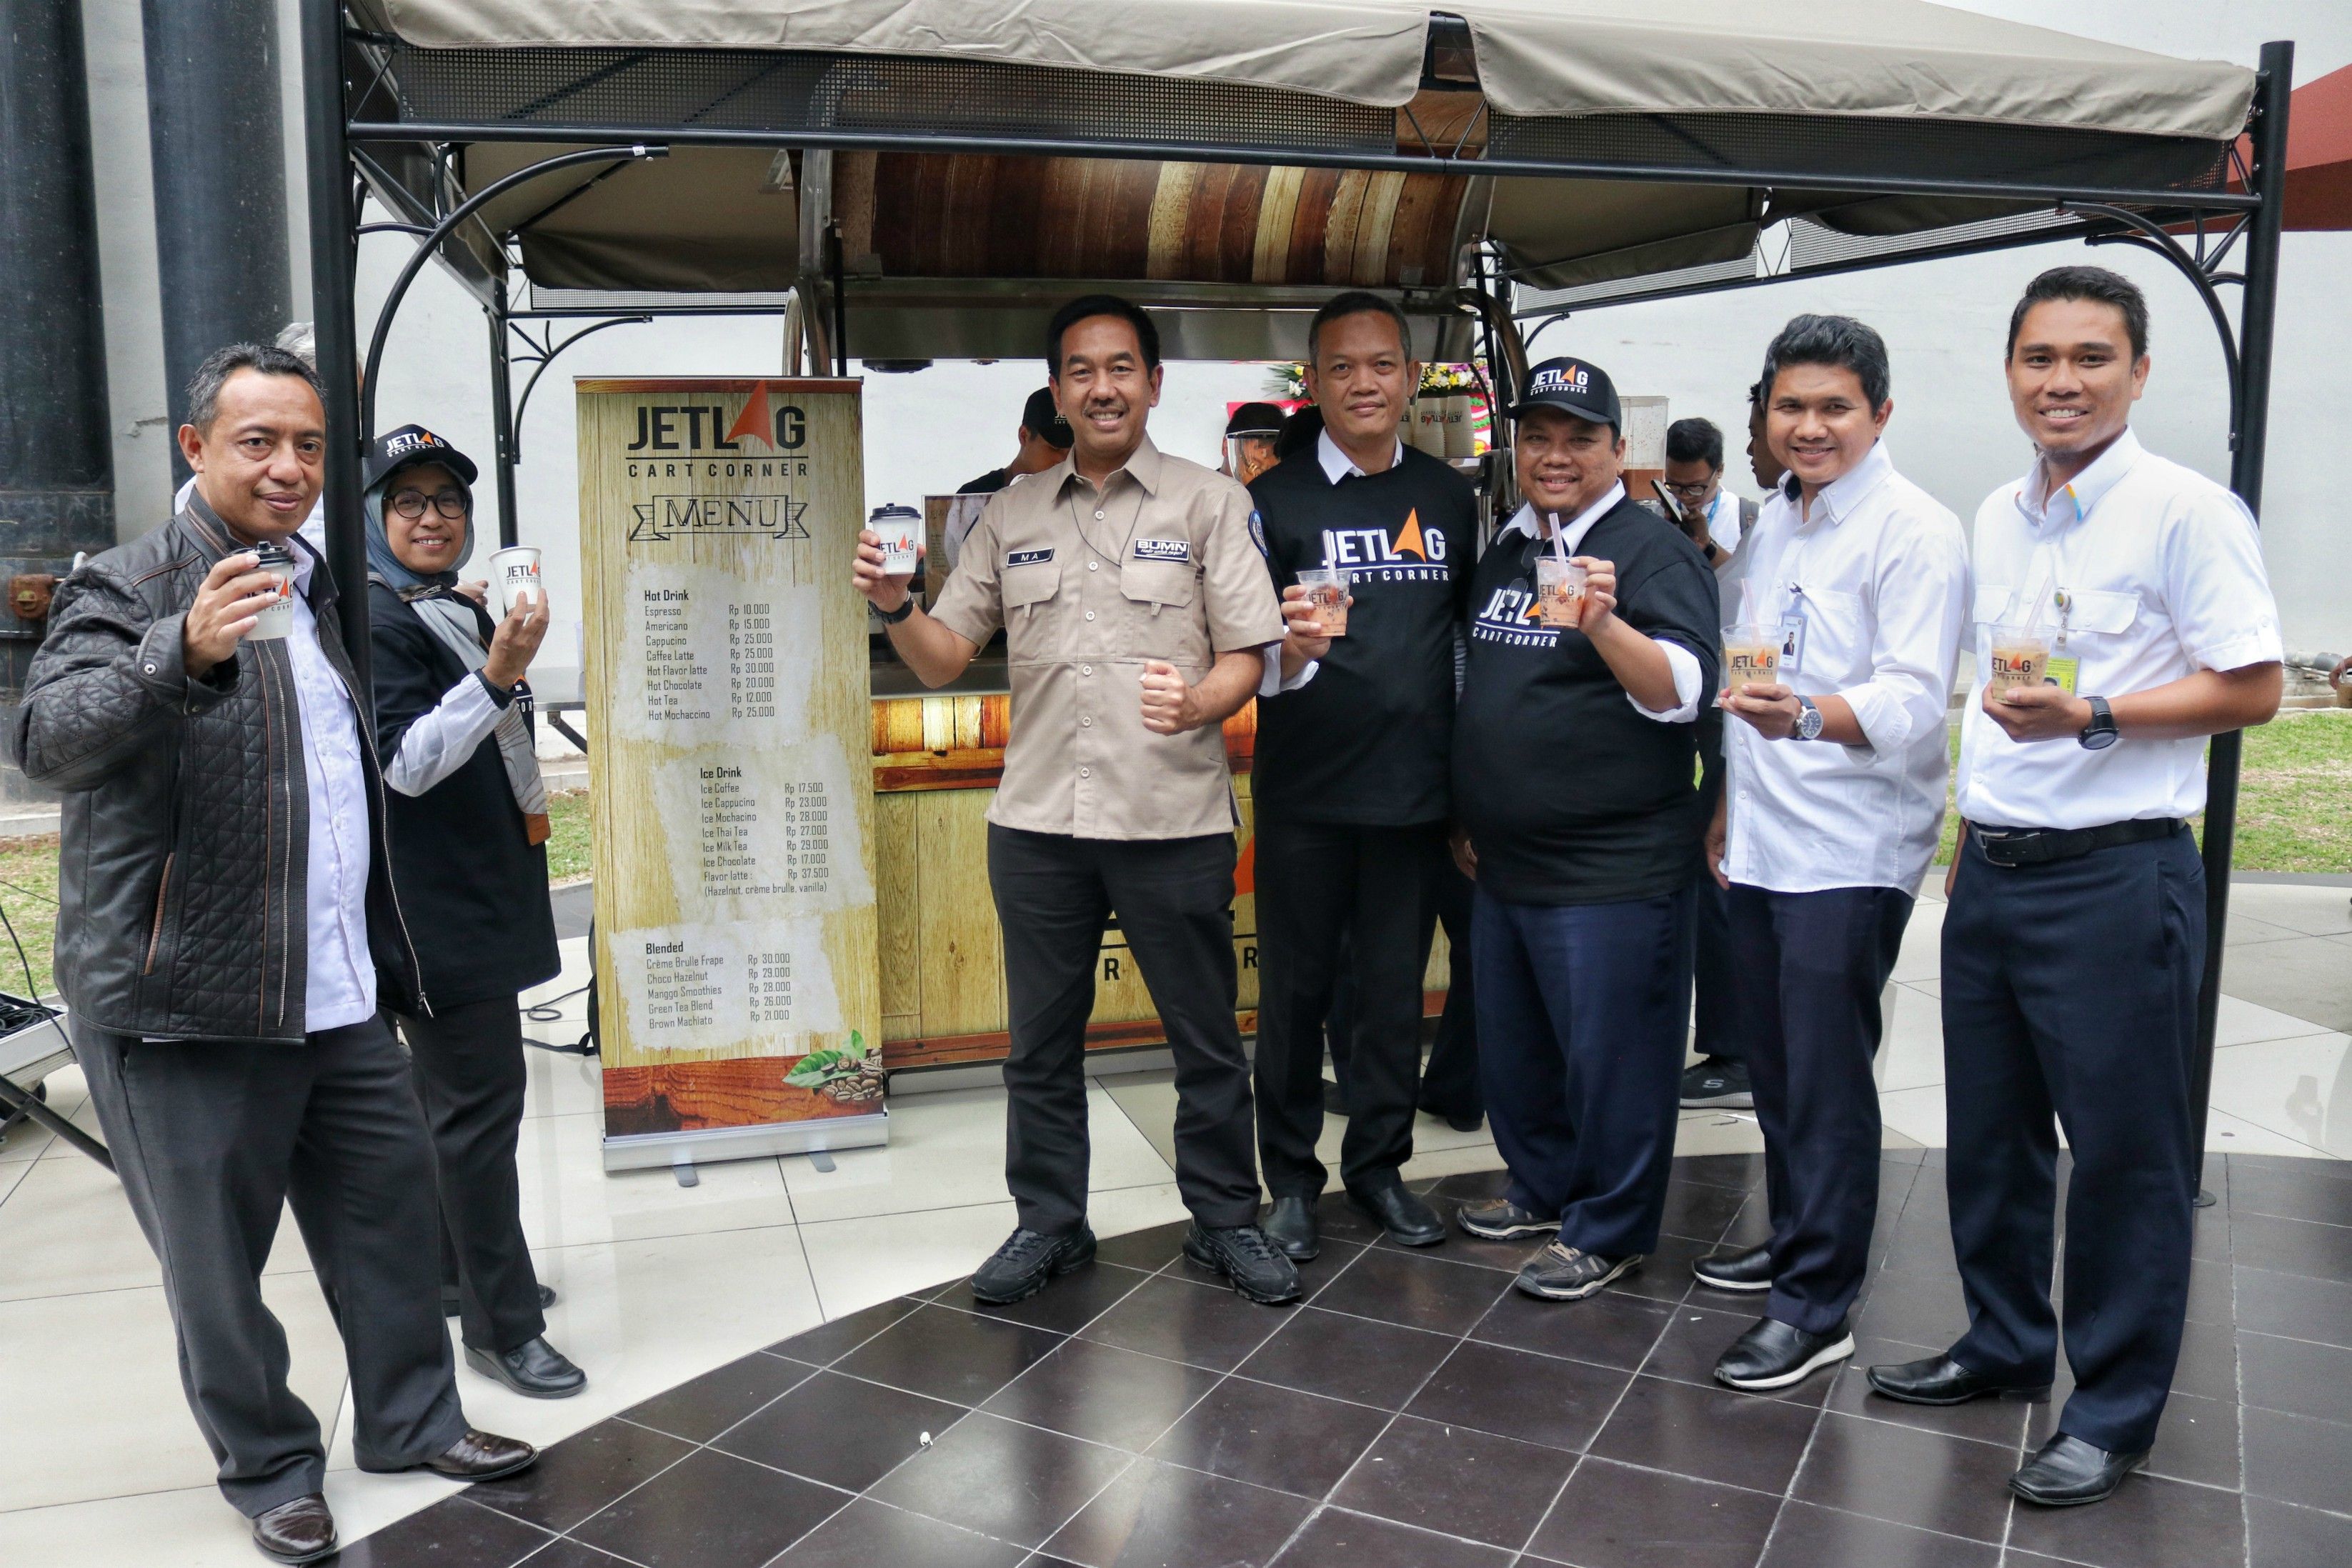 pt. angkasa pura solusi launched the retail jetlag cart corner brand at terminal 3 at soekarno-hatta international airport